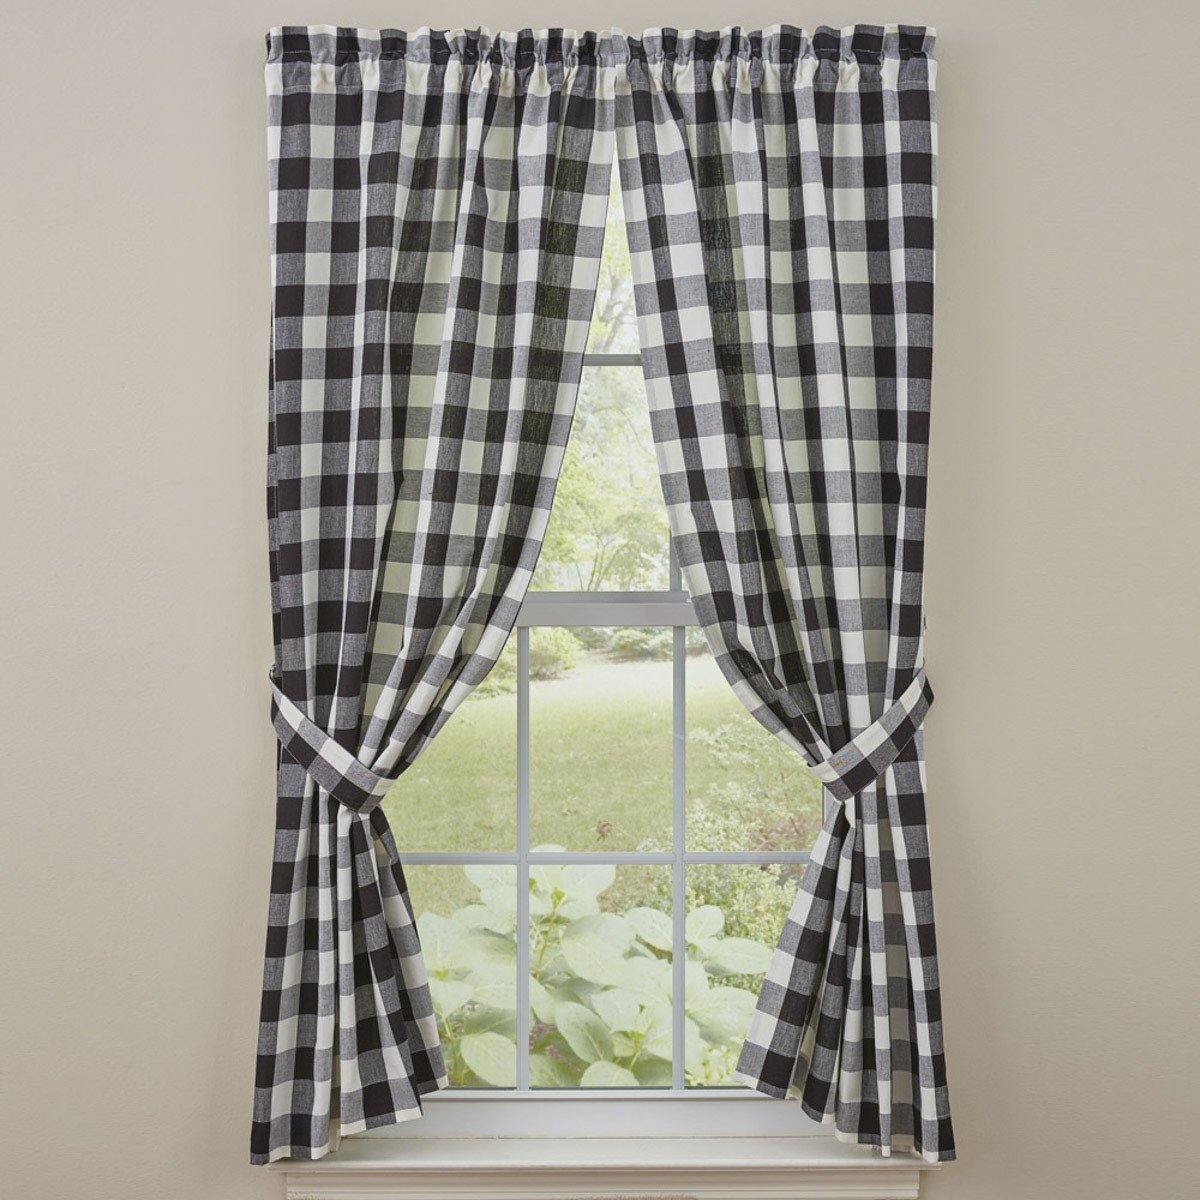 Wicklow Check Curtain Panels - Black & Cream 72x63 Unlined Park Designs - The Fox Decor